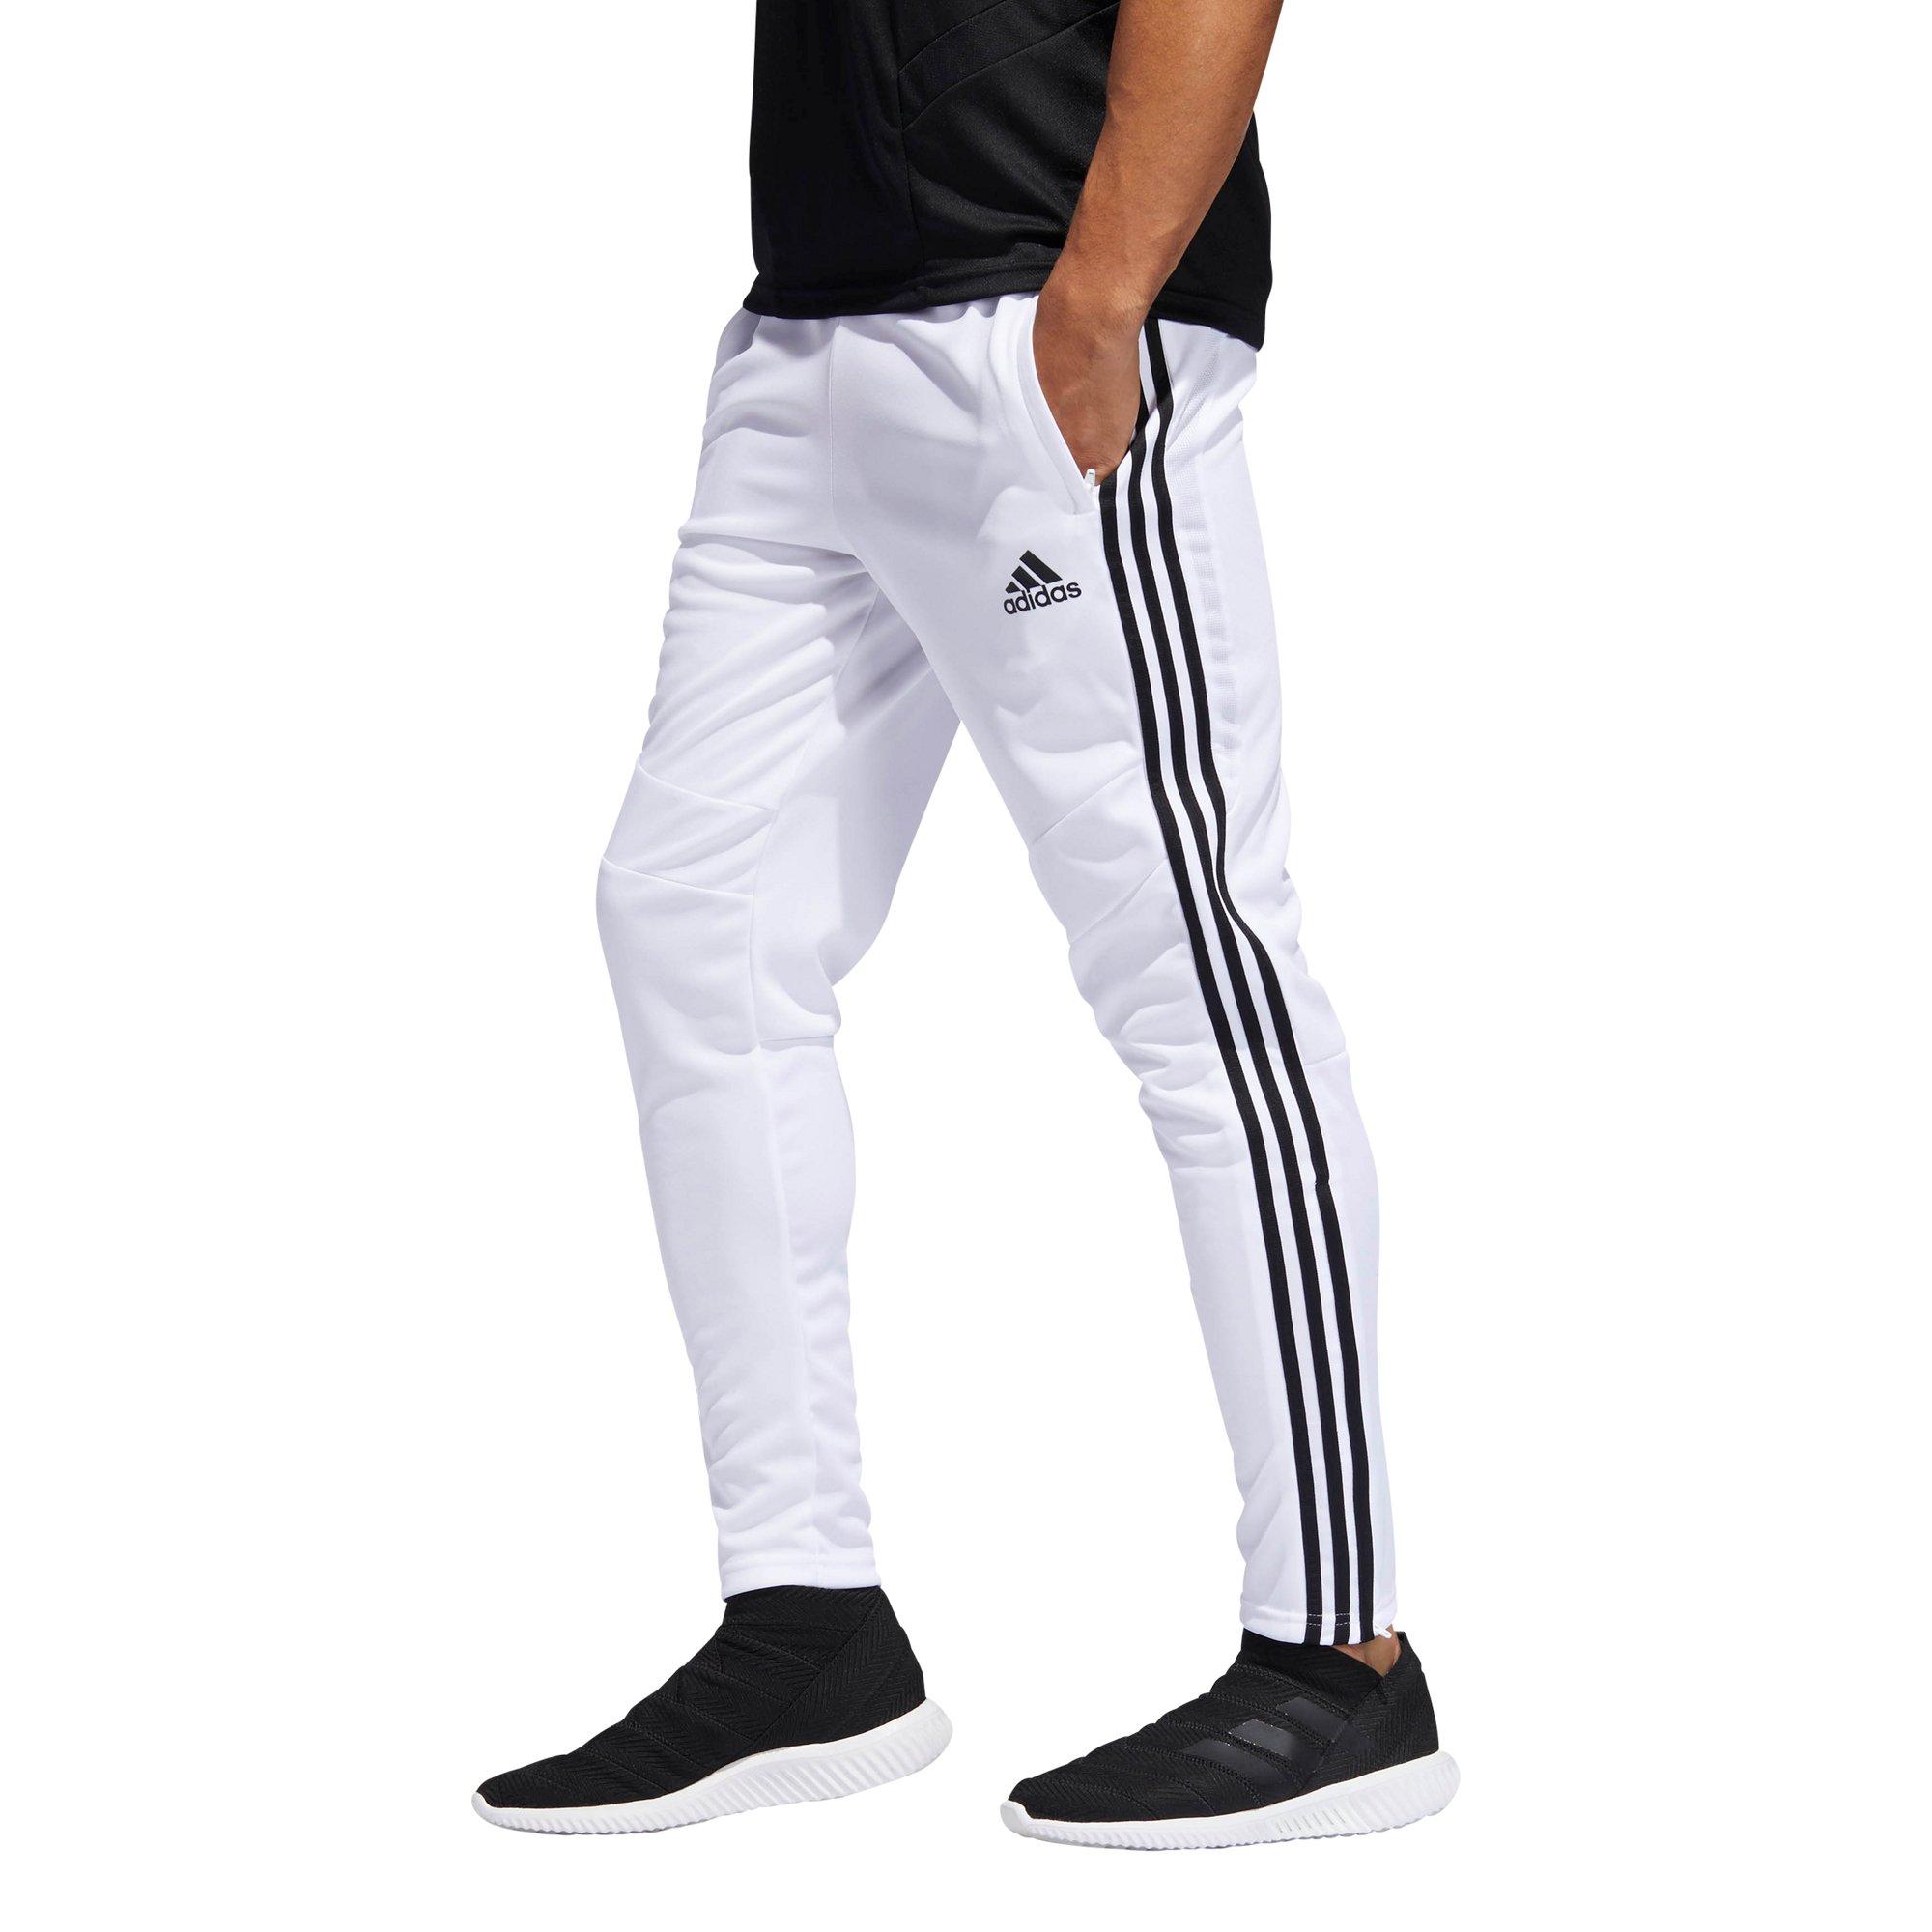 adidas white pants womens